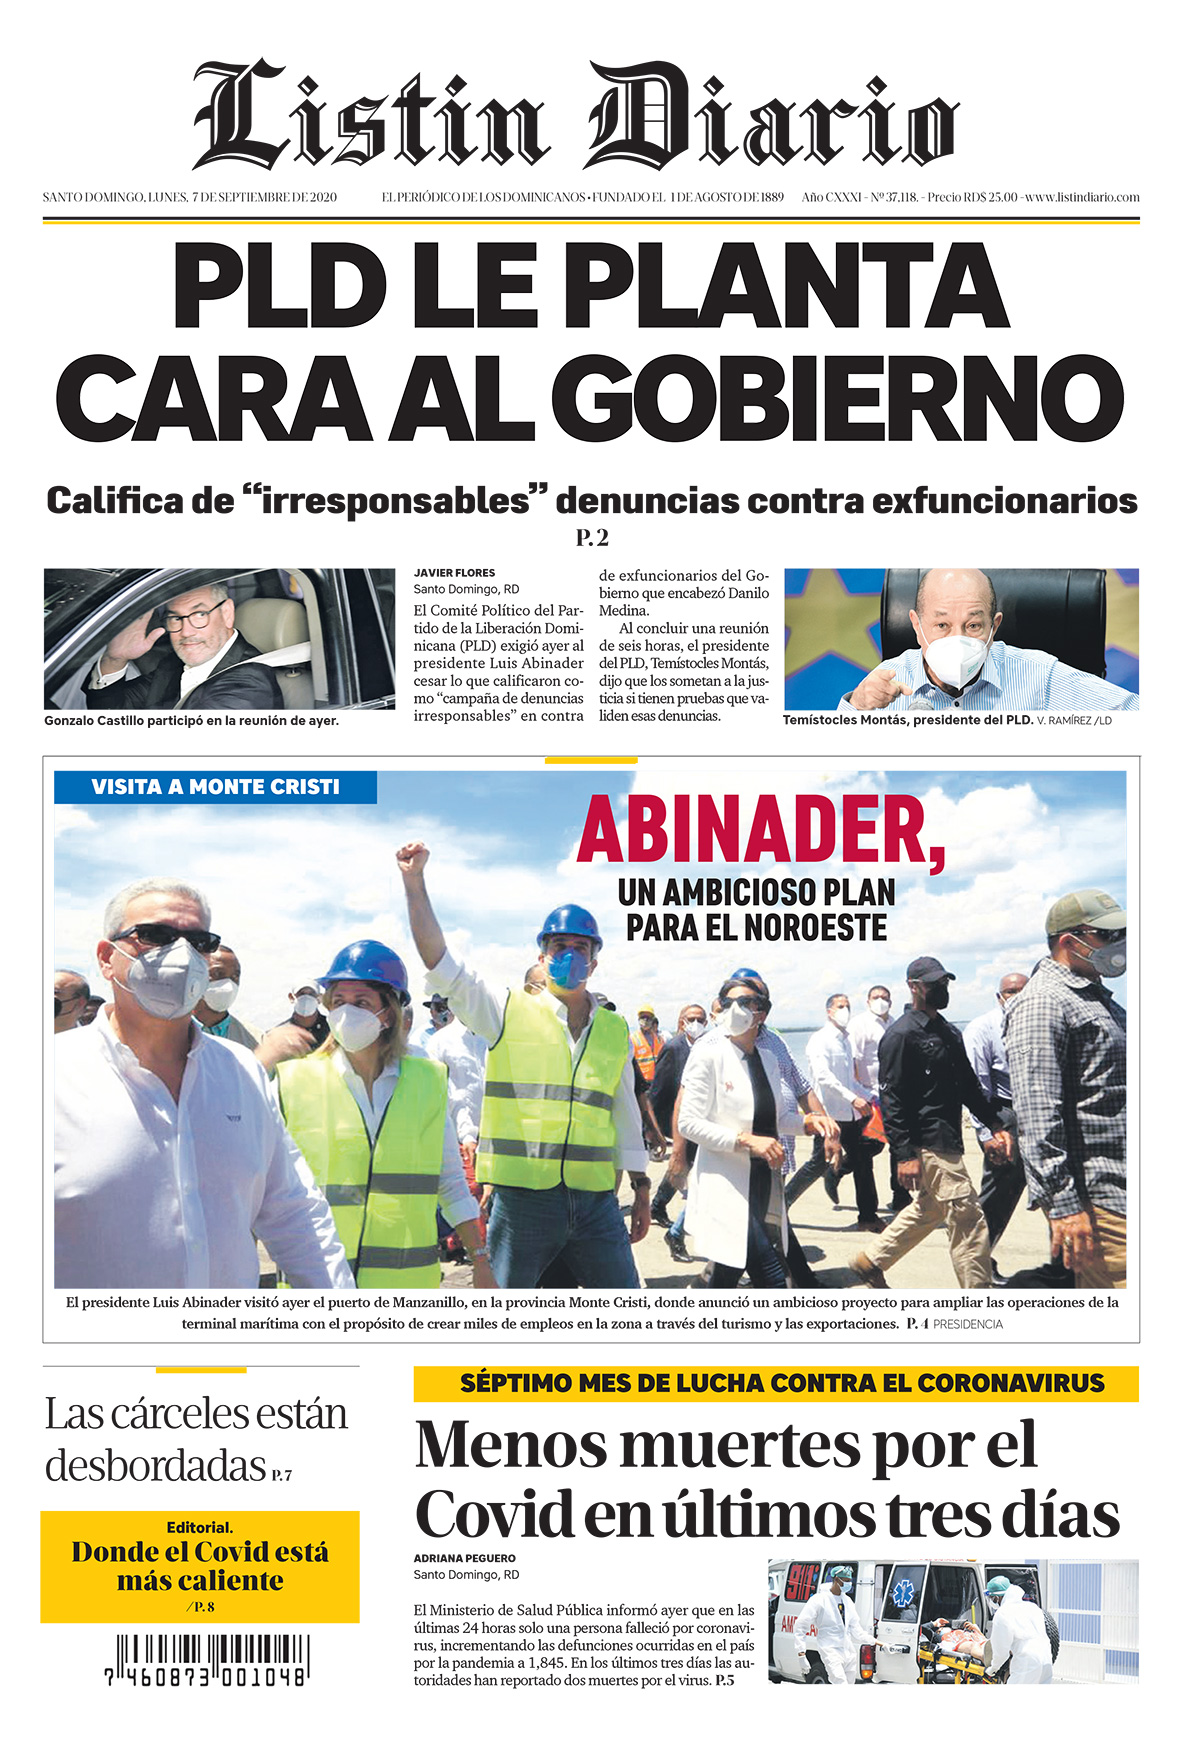 Portada Periódico Listín Diario, Lunes 07 de Septiembre, 2020